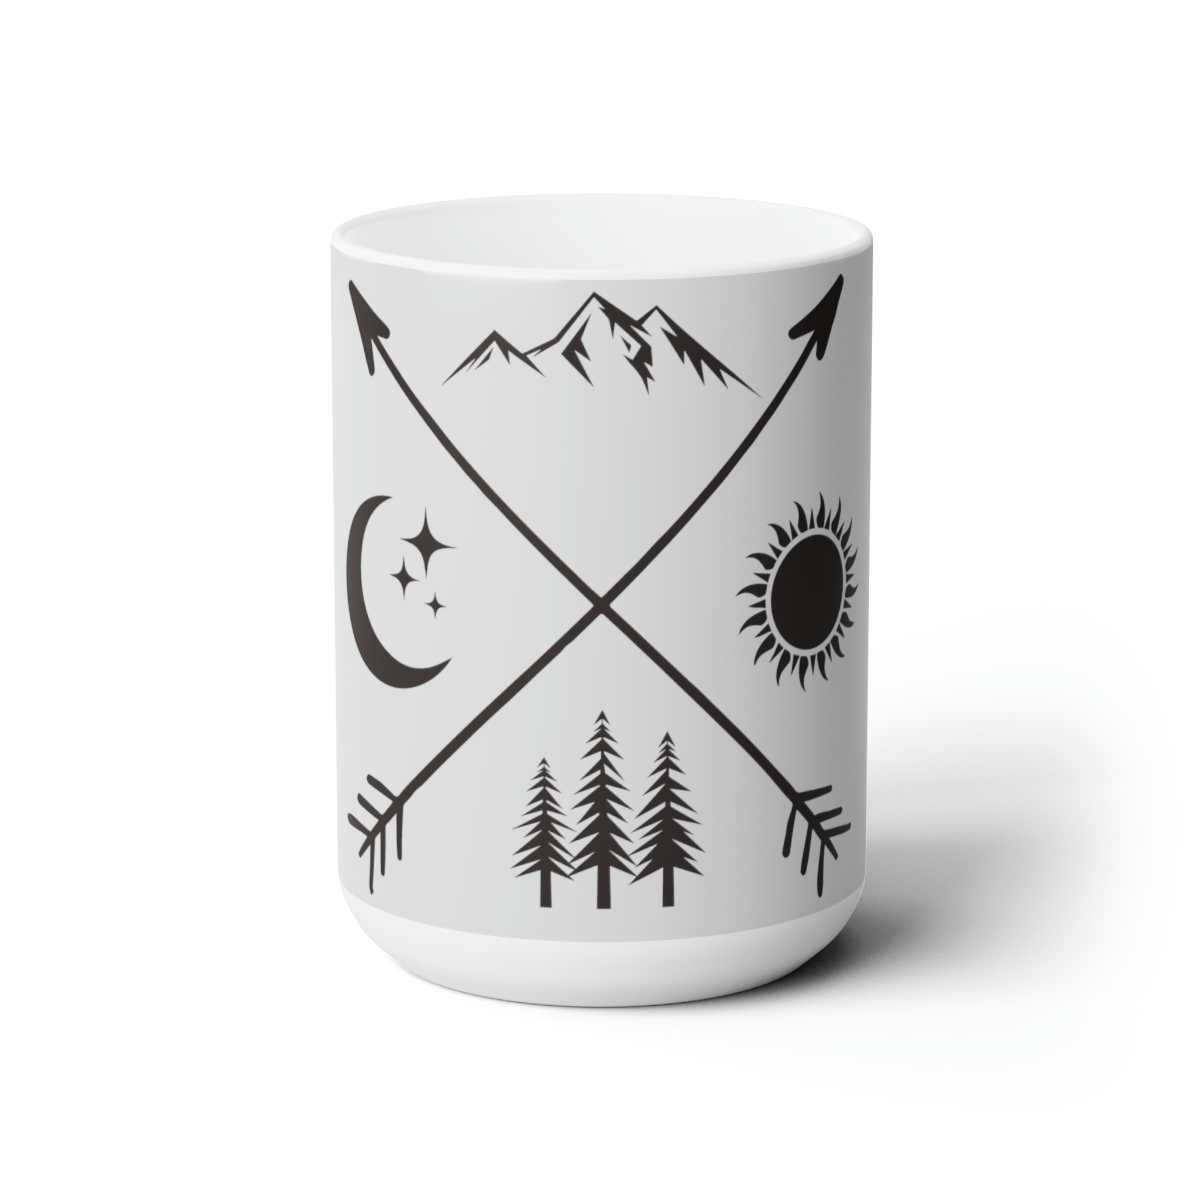 15oz Personalized Ceramic Mug: Nature's Elements Design - $20.60